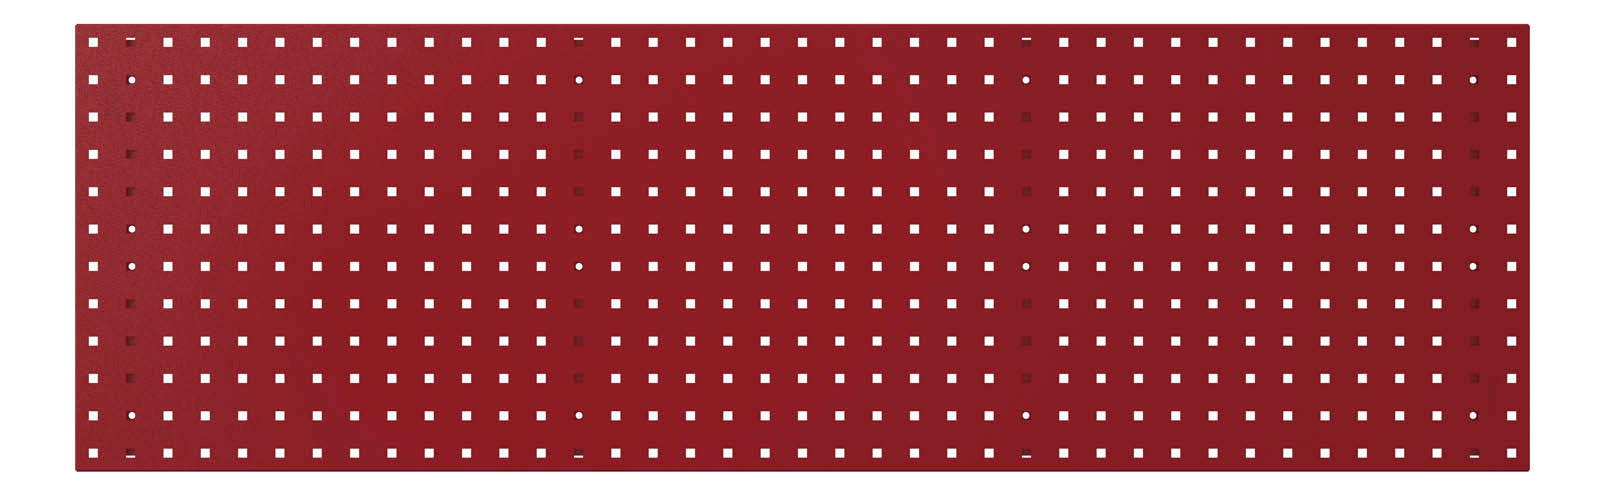 Bott Perfo Panel Horizontal (WxDxH: 1486x13x457mm) - Part No:14025118